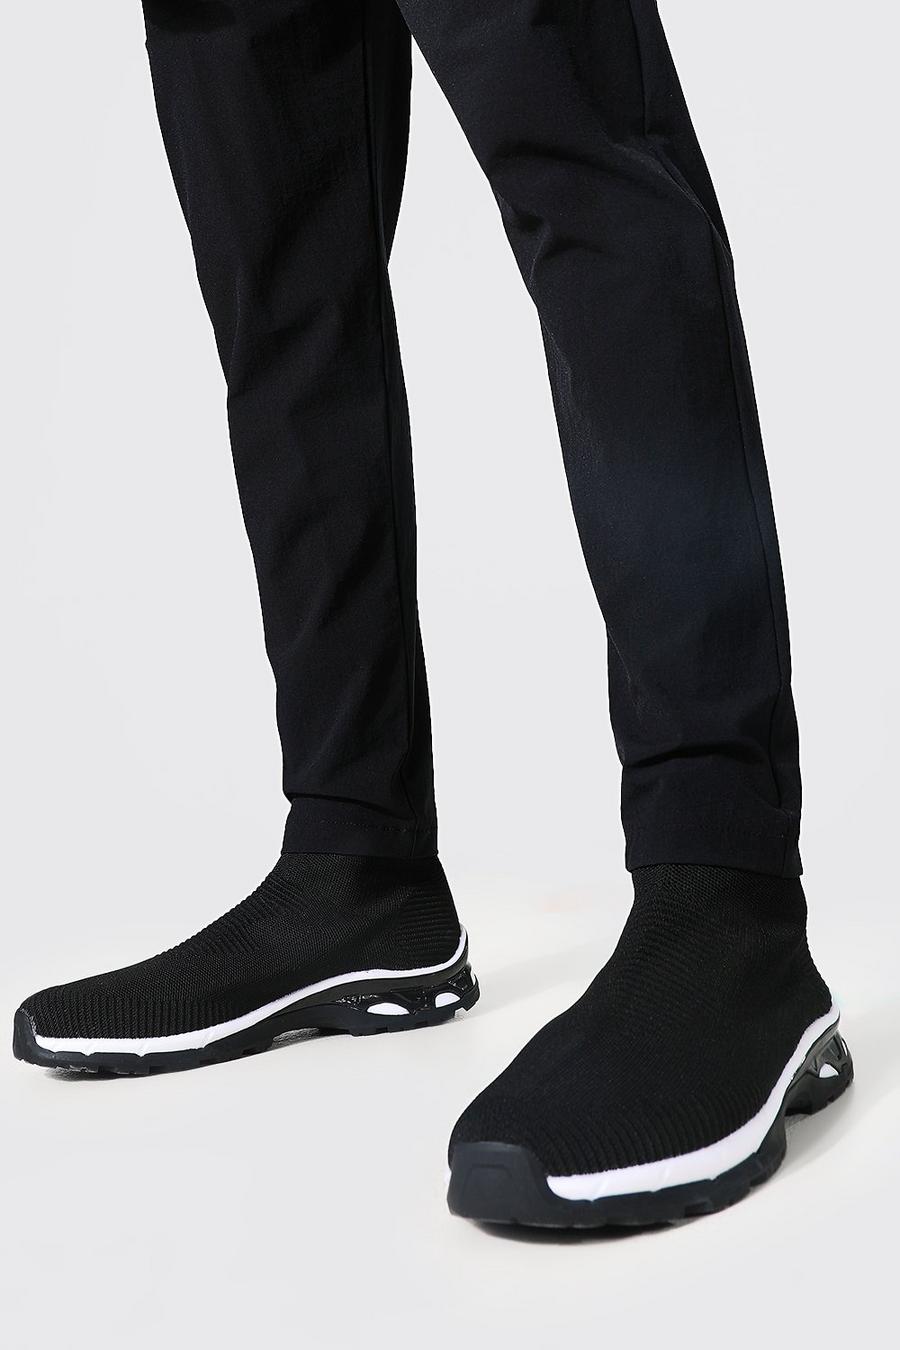 Botas calcetín acanaladas, Black negro image number 1